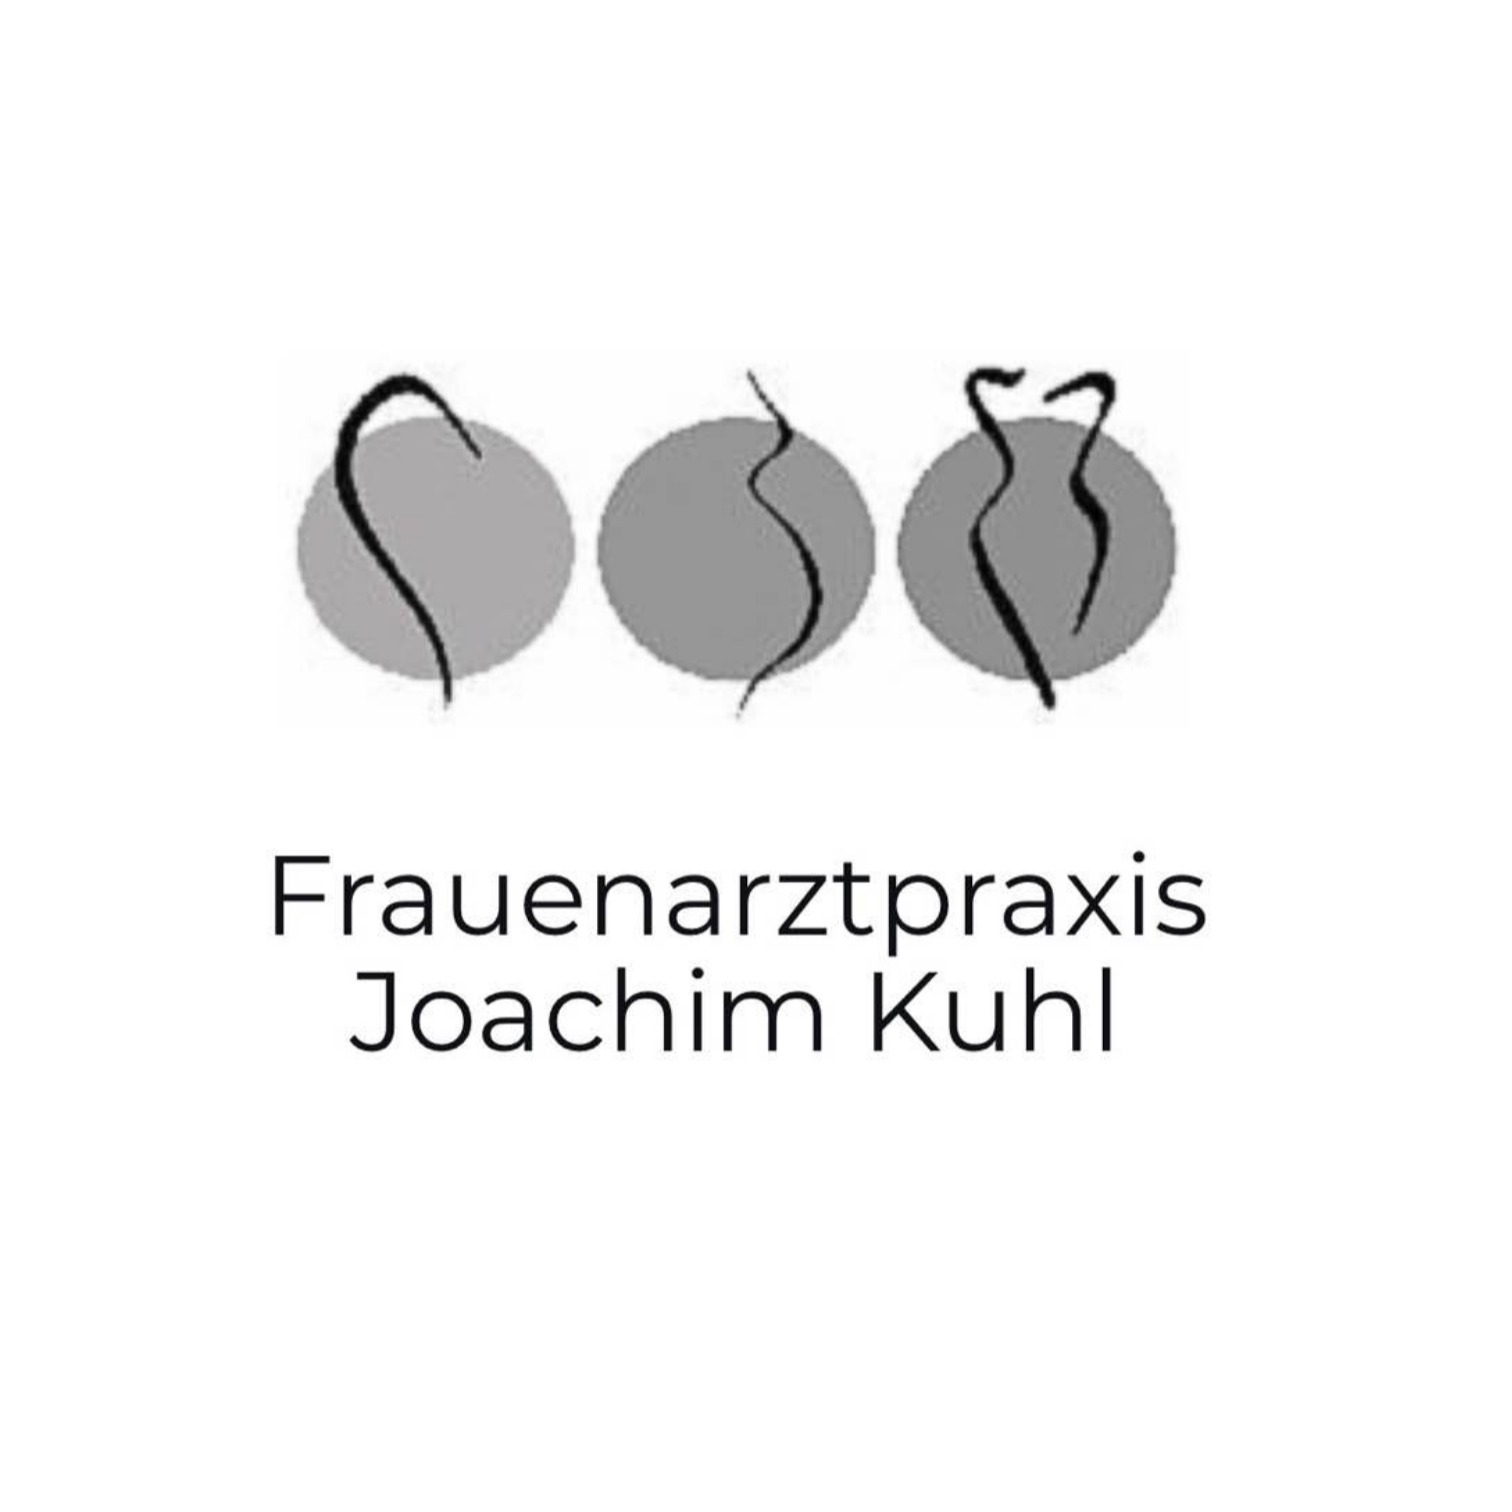 Frauenarztpraxis Joachim Kuhl Logo